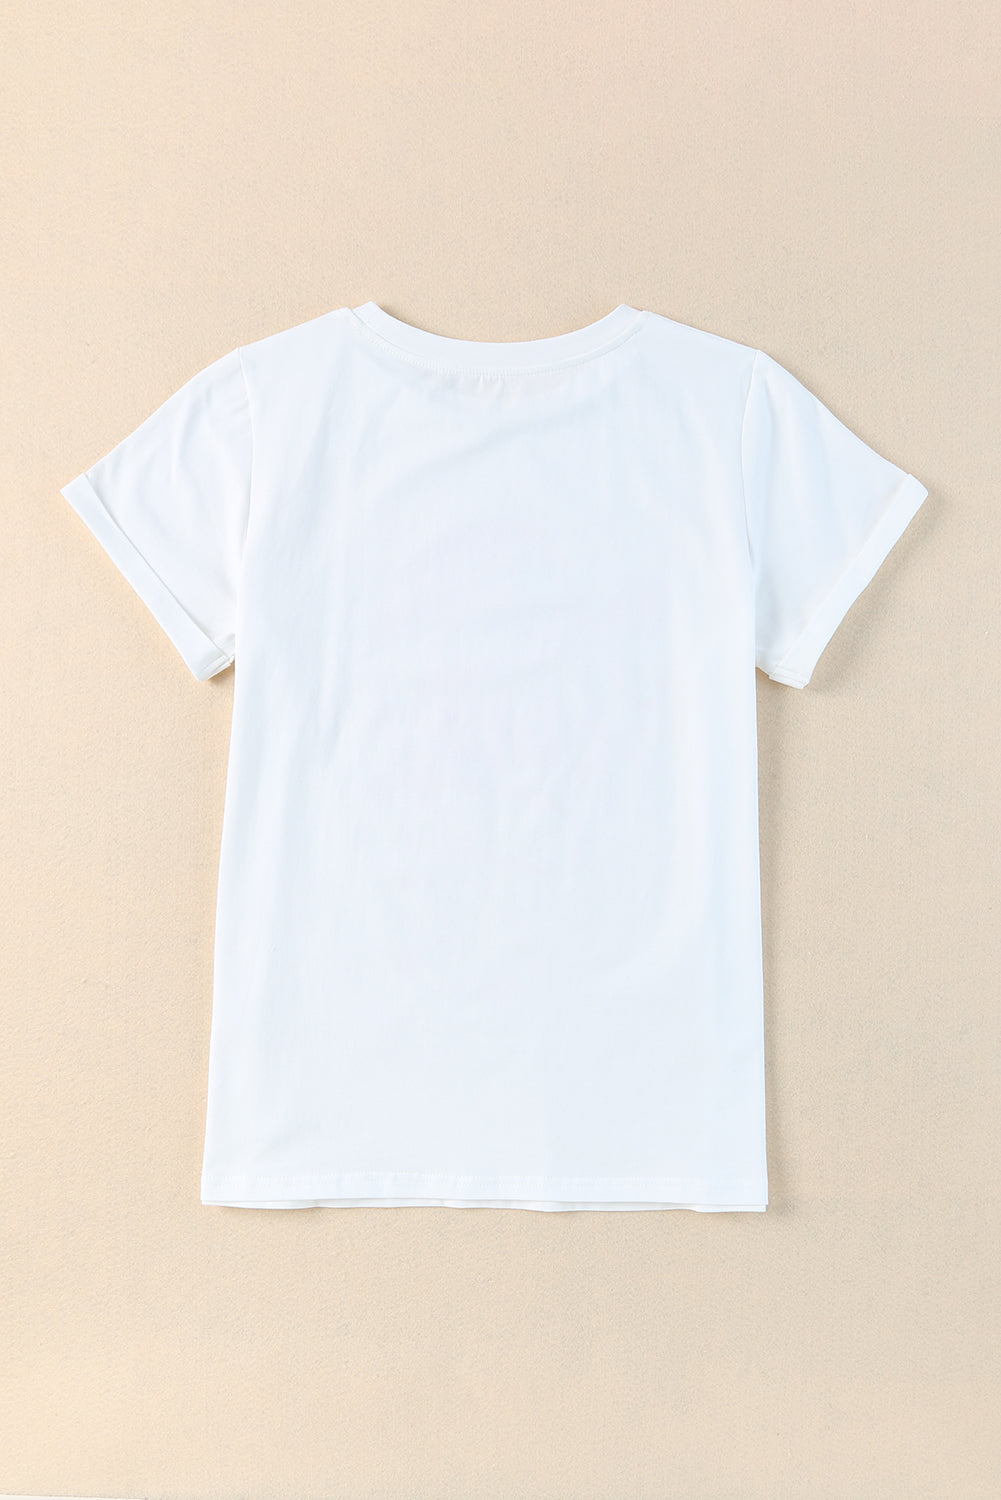 T-shirt graphique Howdy blanc en strass